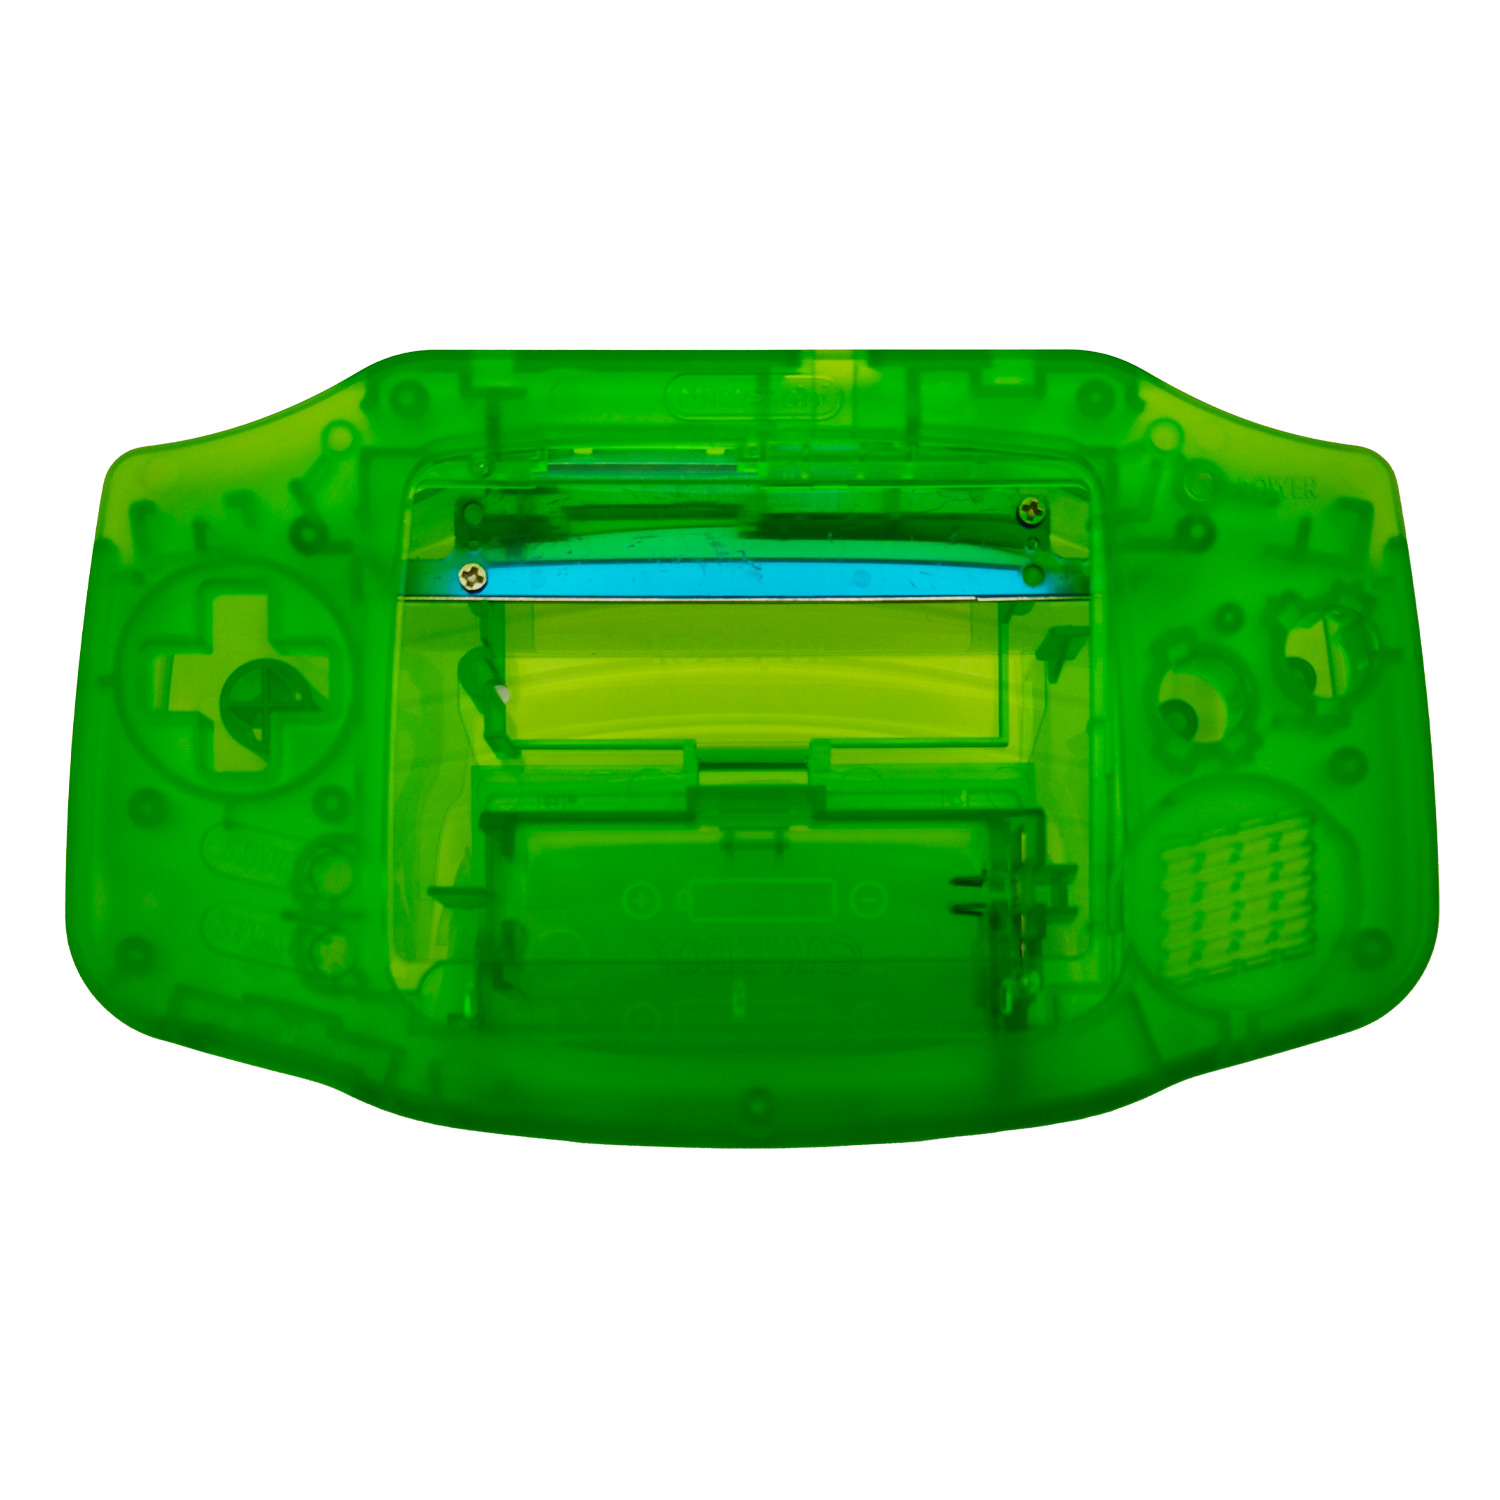 Game Boy Advance Shell (Green Clear) - SALE